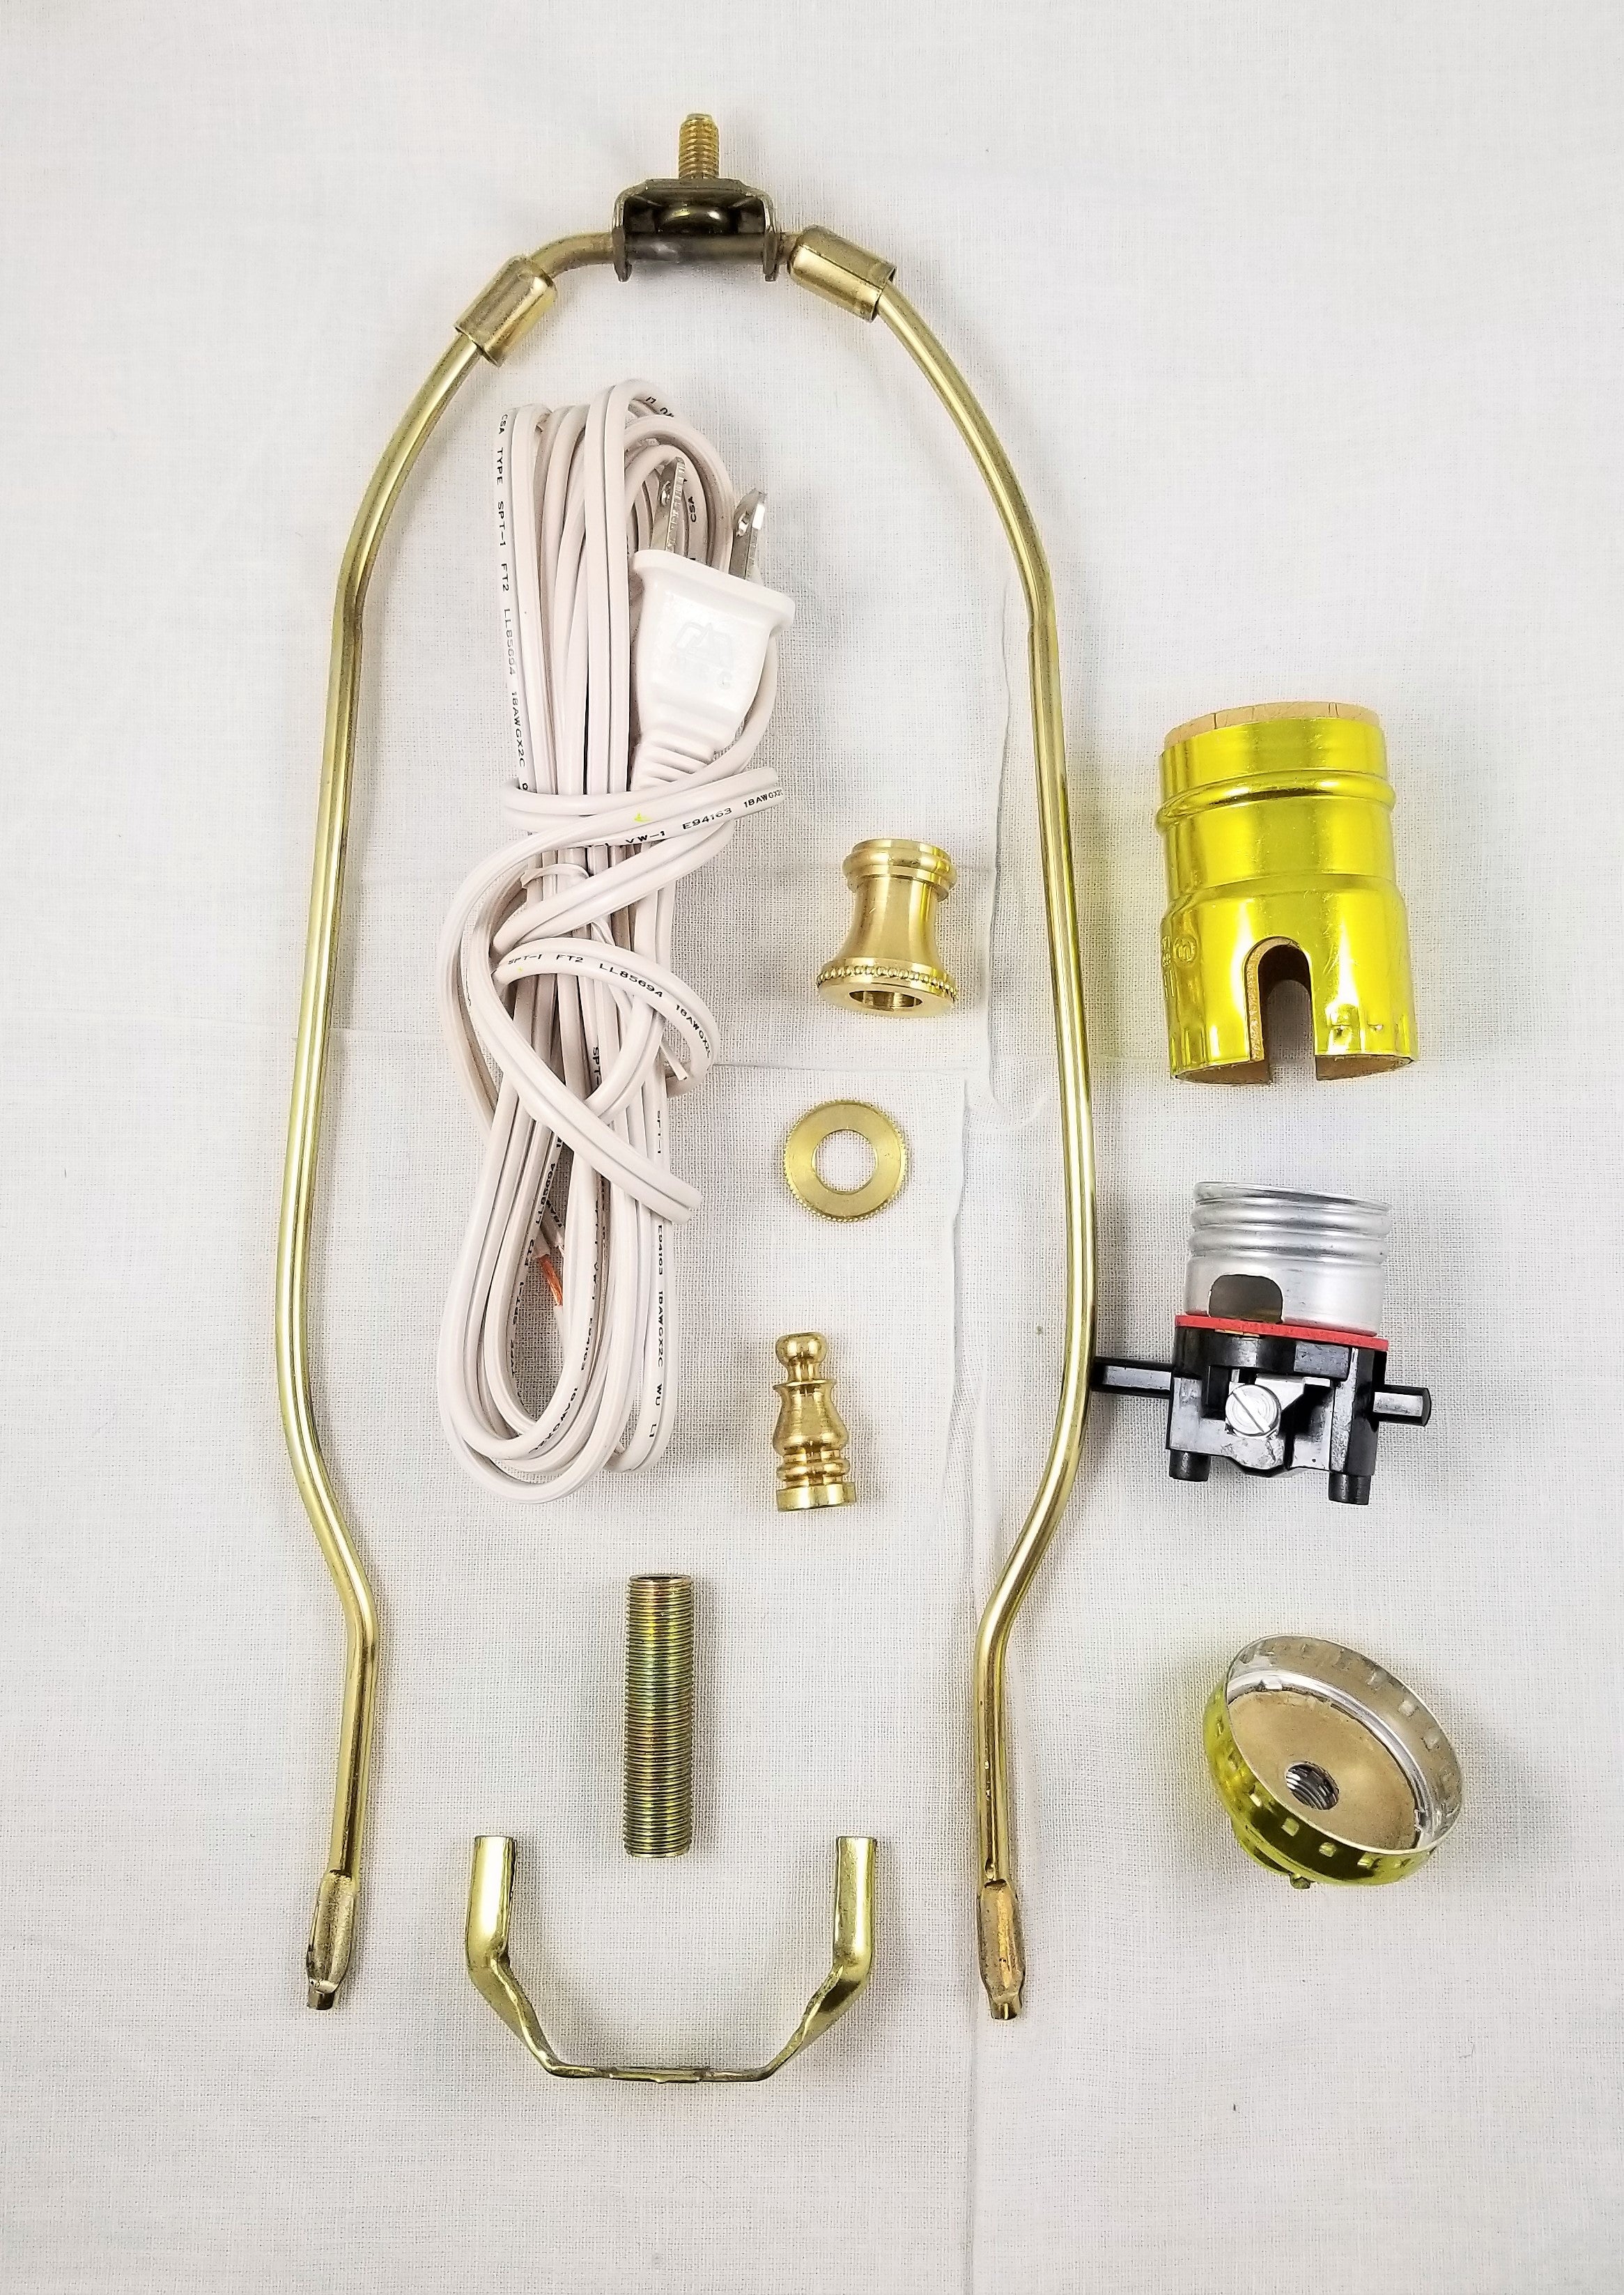 Make-A-Lamp Kit with Harp – My Lamp Parts